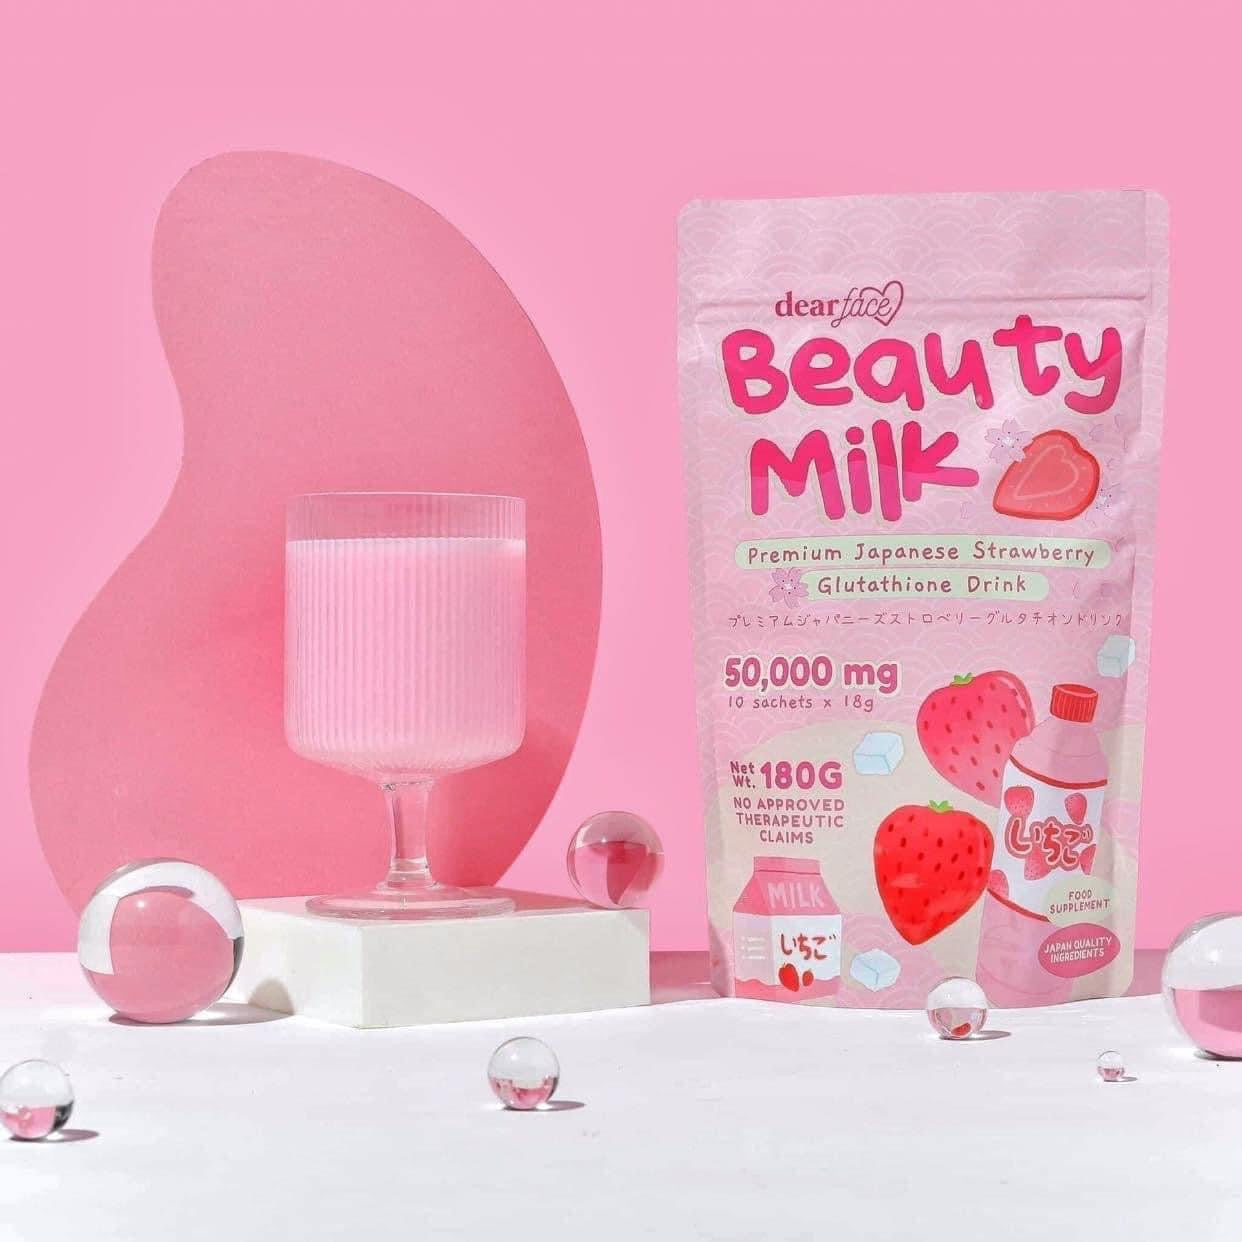 Dear face Beauty Milk Melon and Strawberry Combo